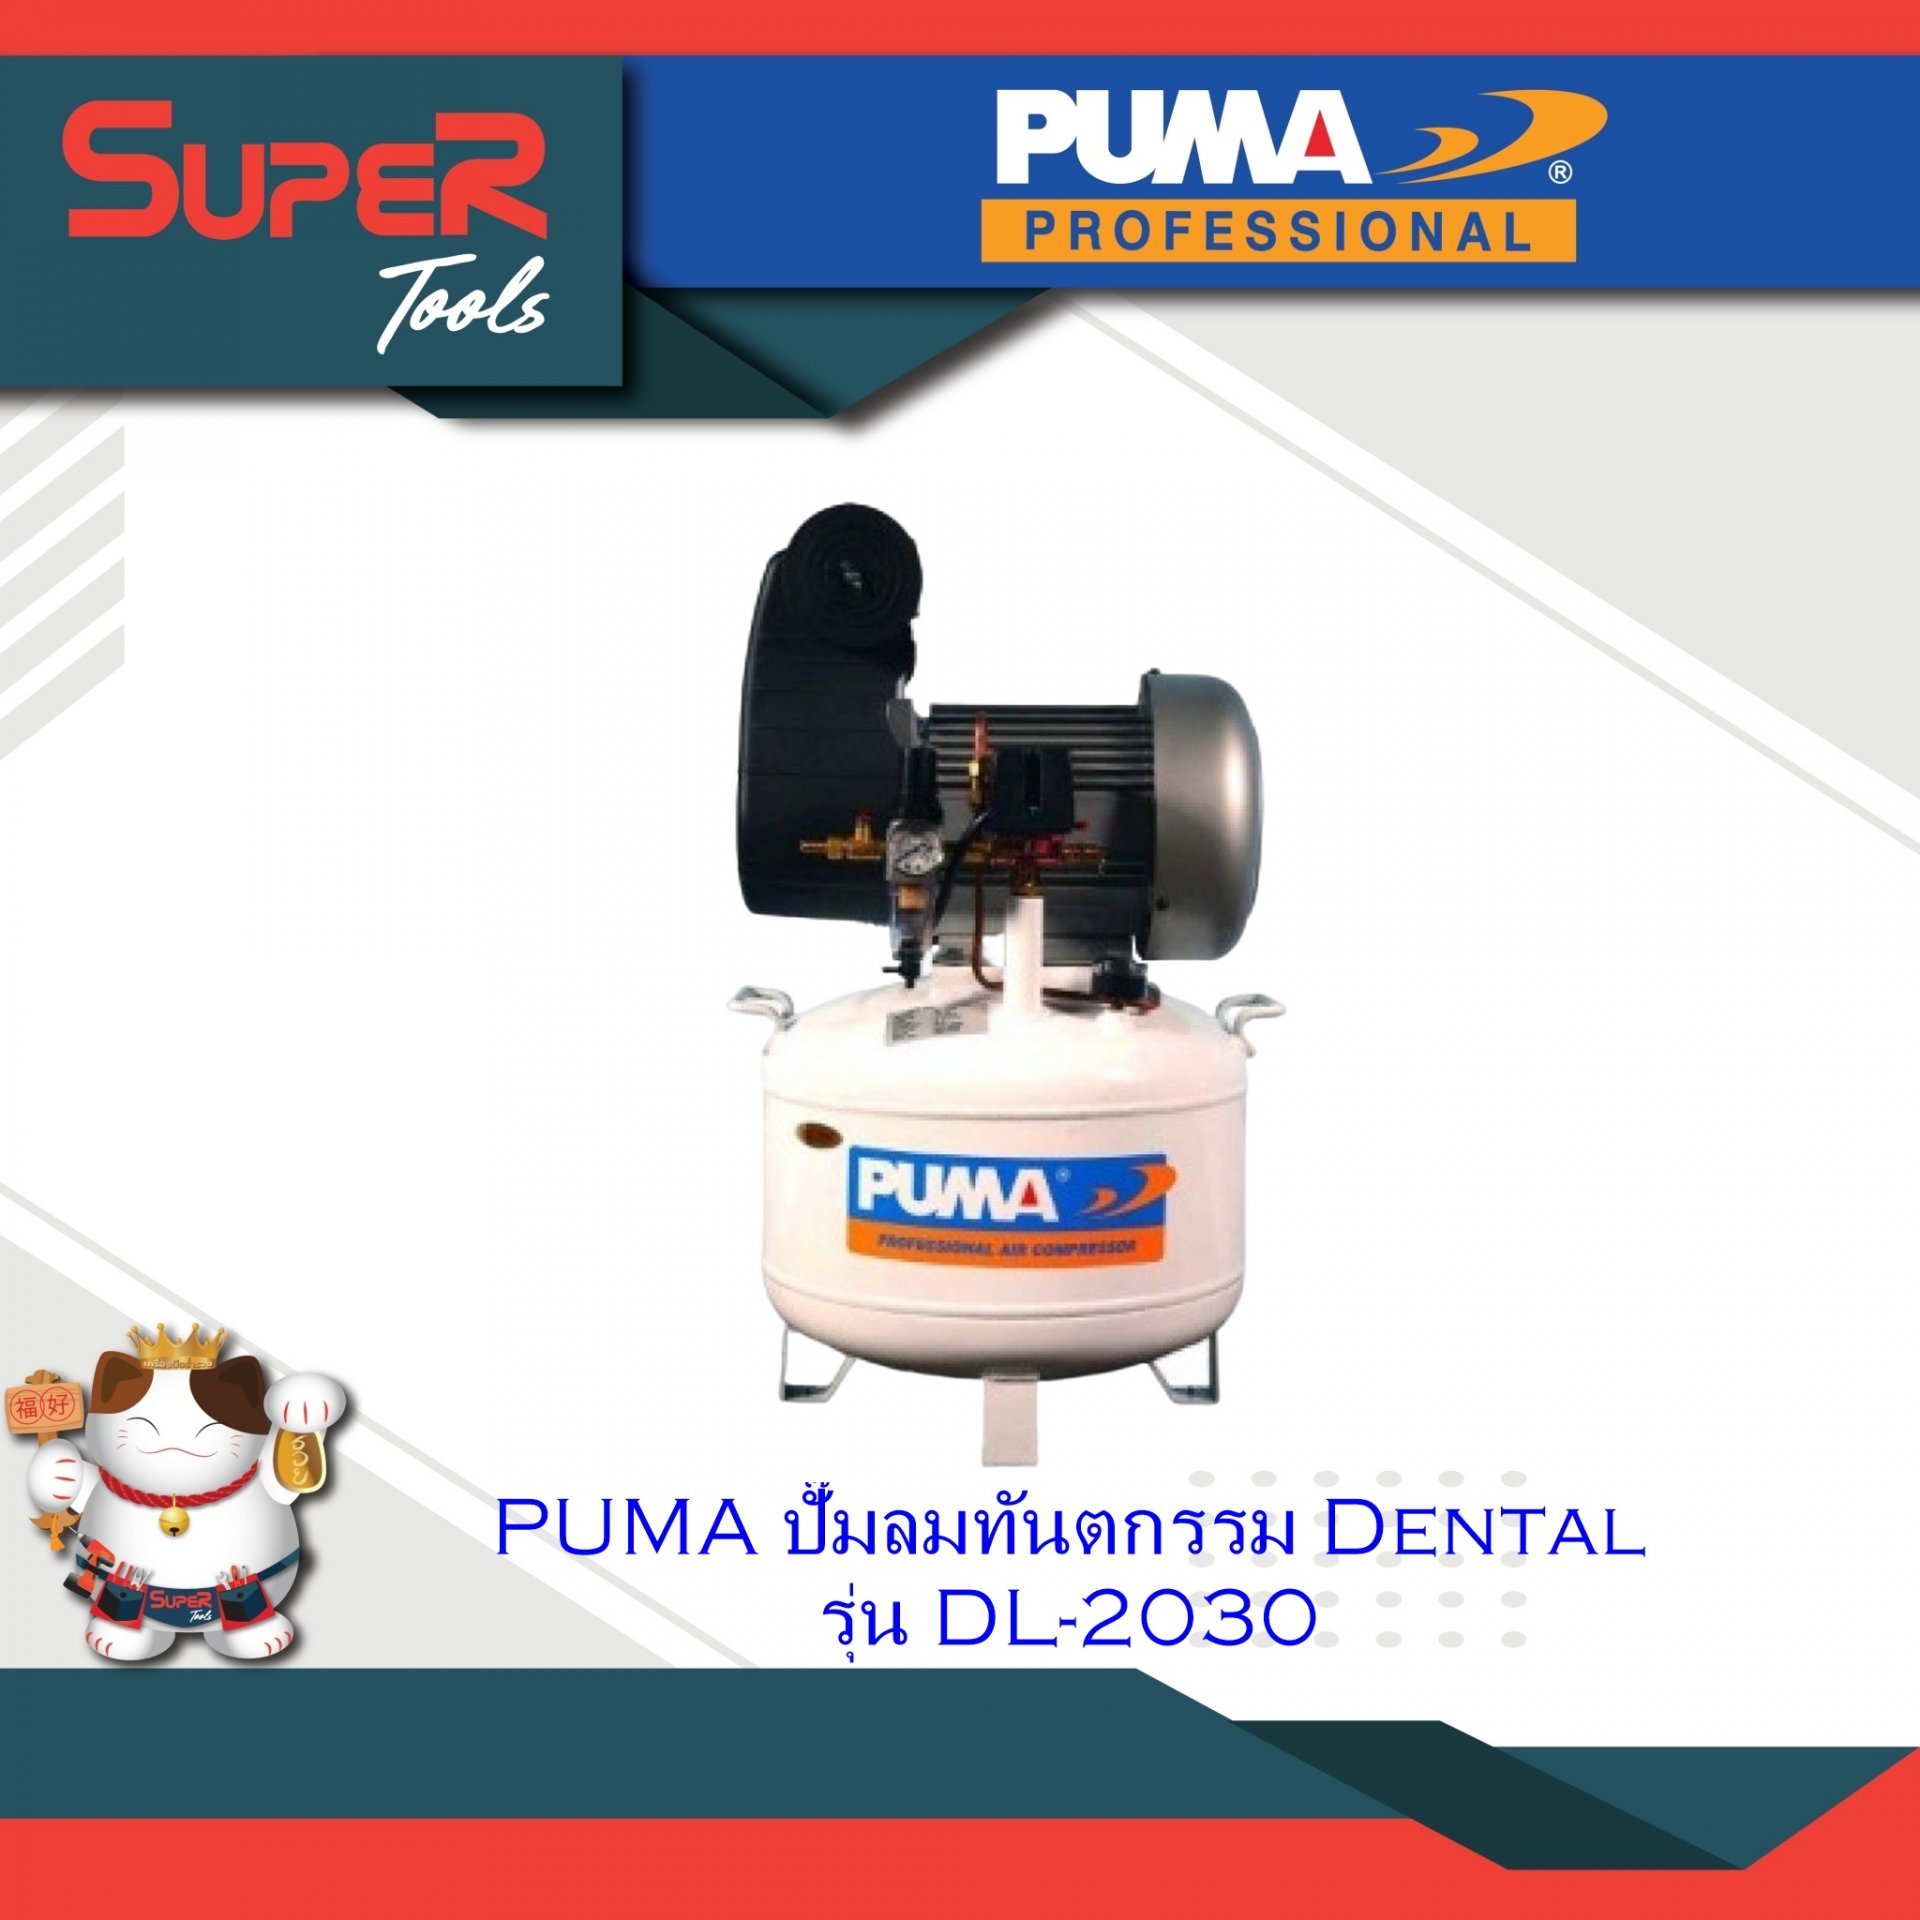 PUMA ปั๊มลมทันตกรรม Dental รุ่น DL-2030